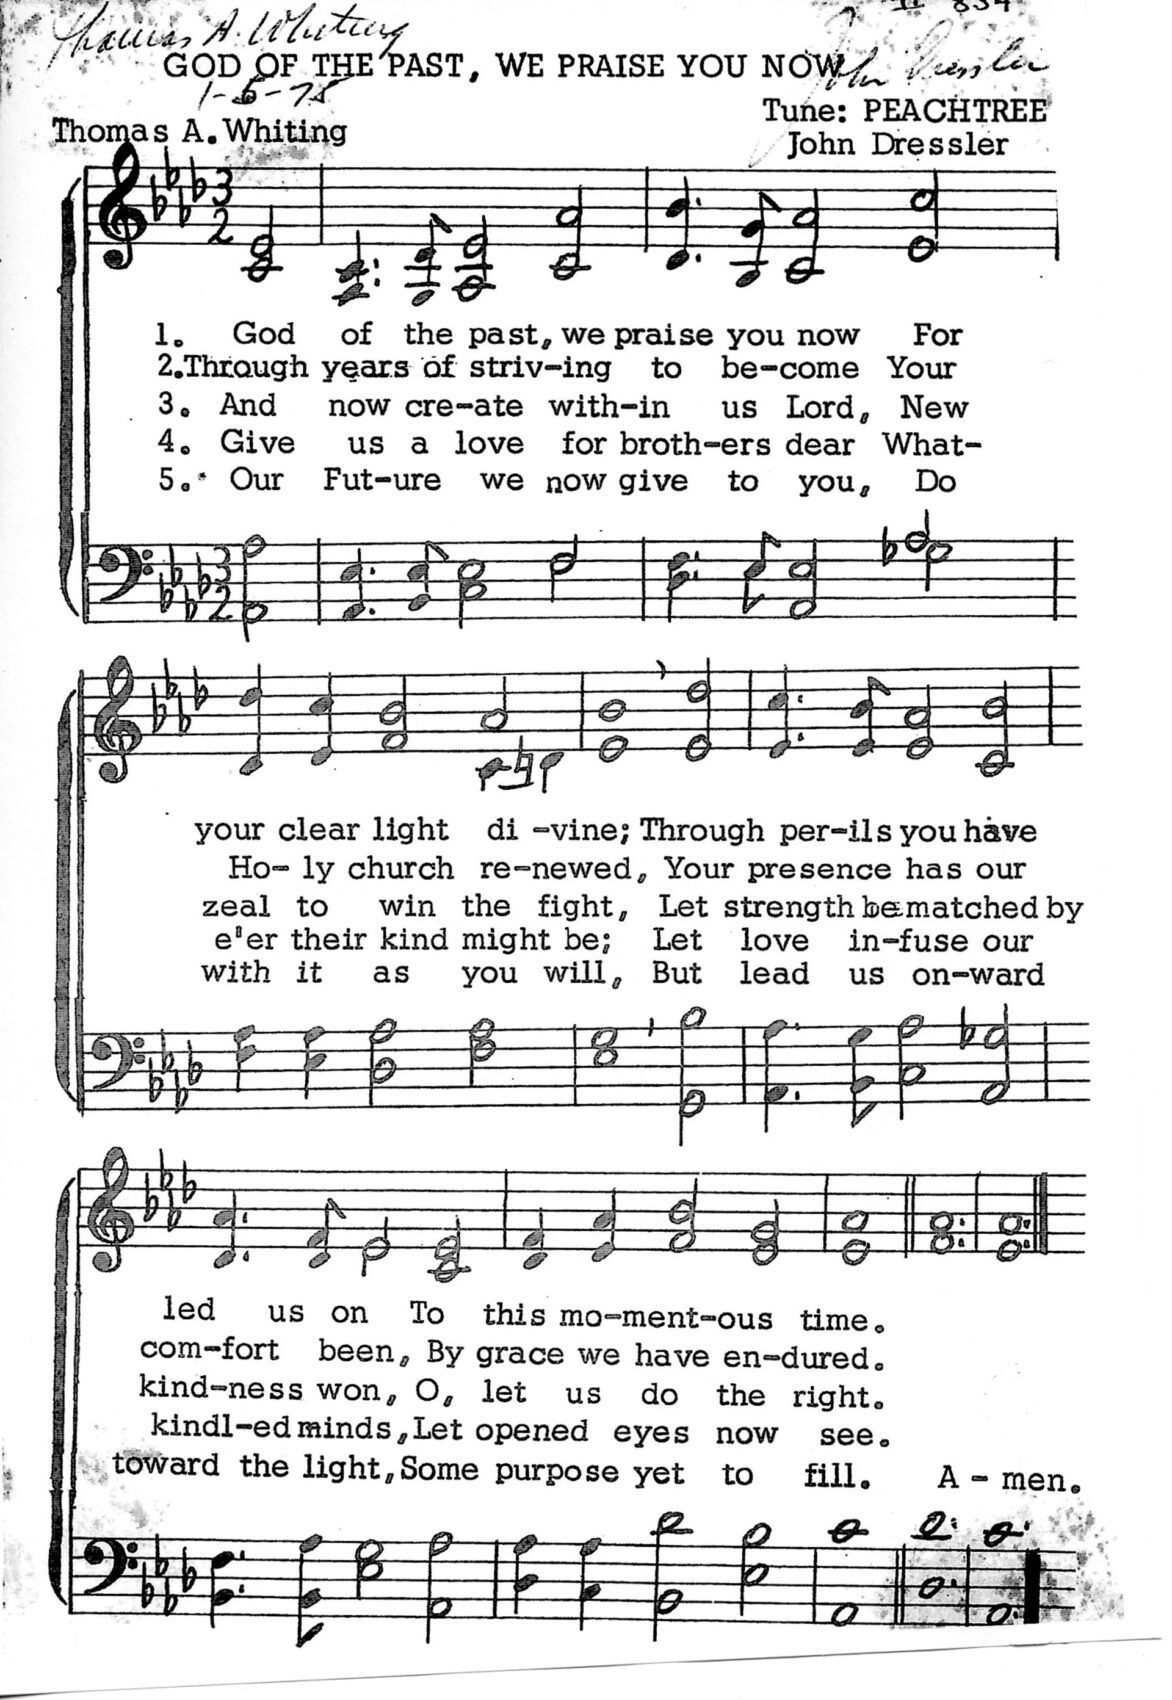 Peachtree Road United Methodist Church History 1953-1978: 50th Anniversary Anthem